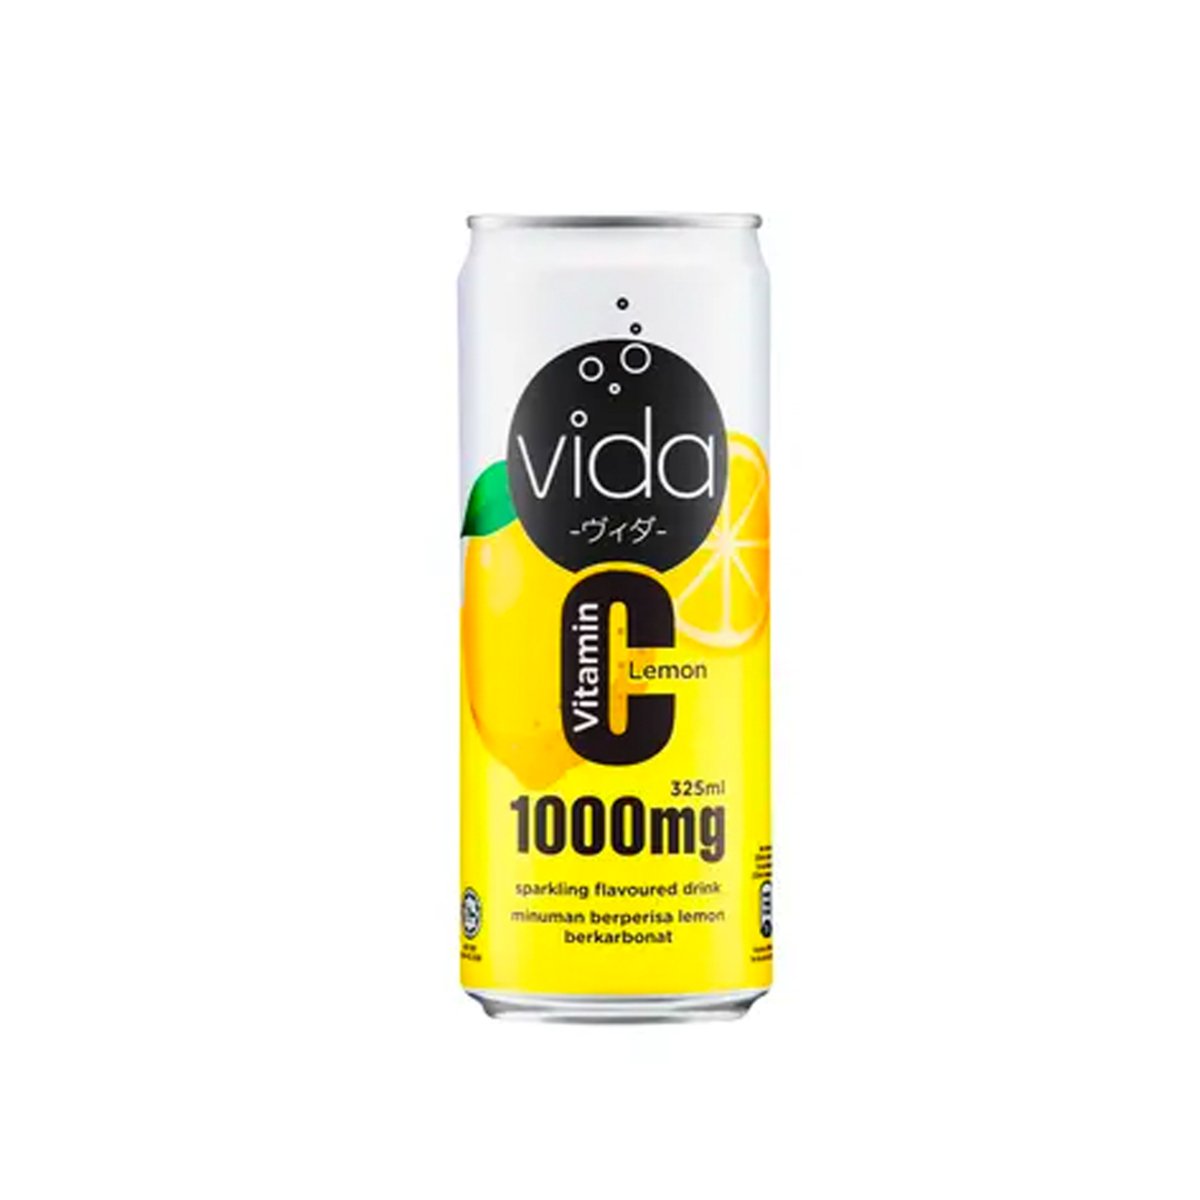 Vida VitaminC Lemon 325ml